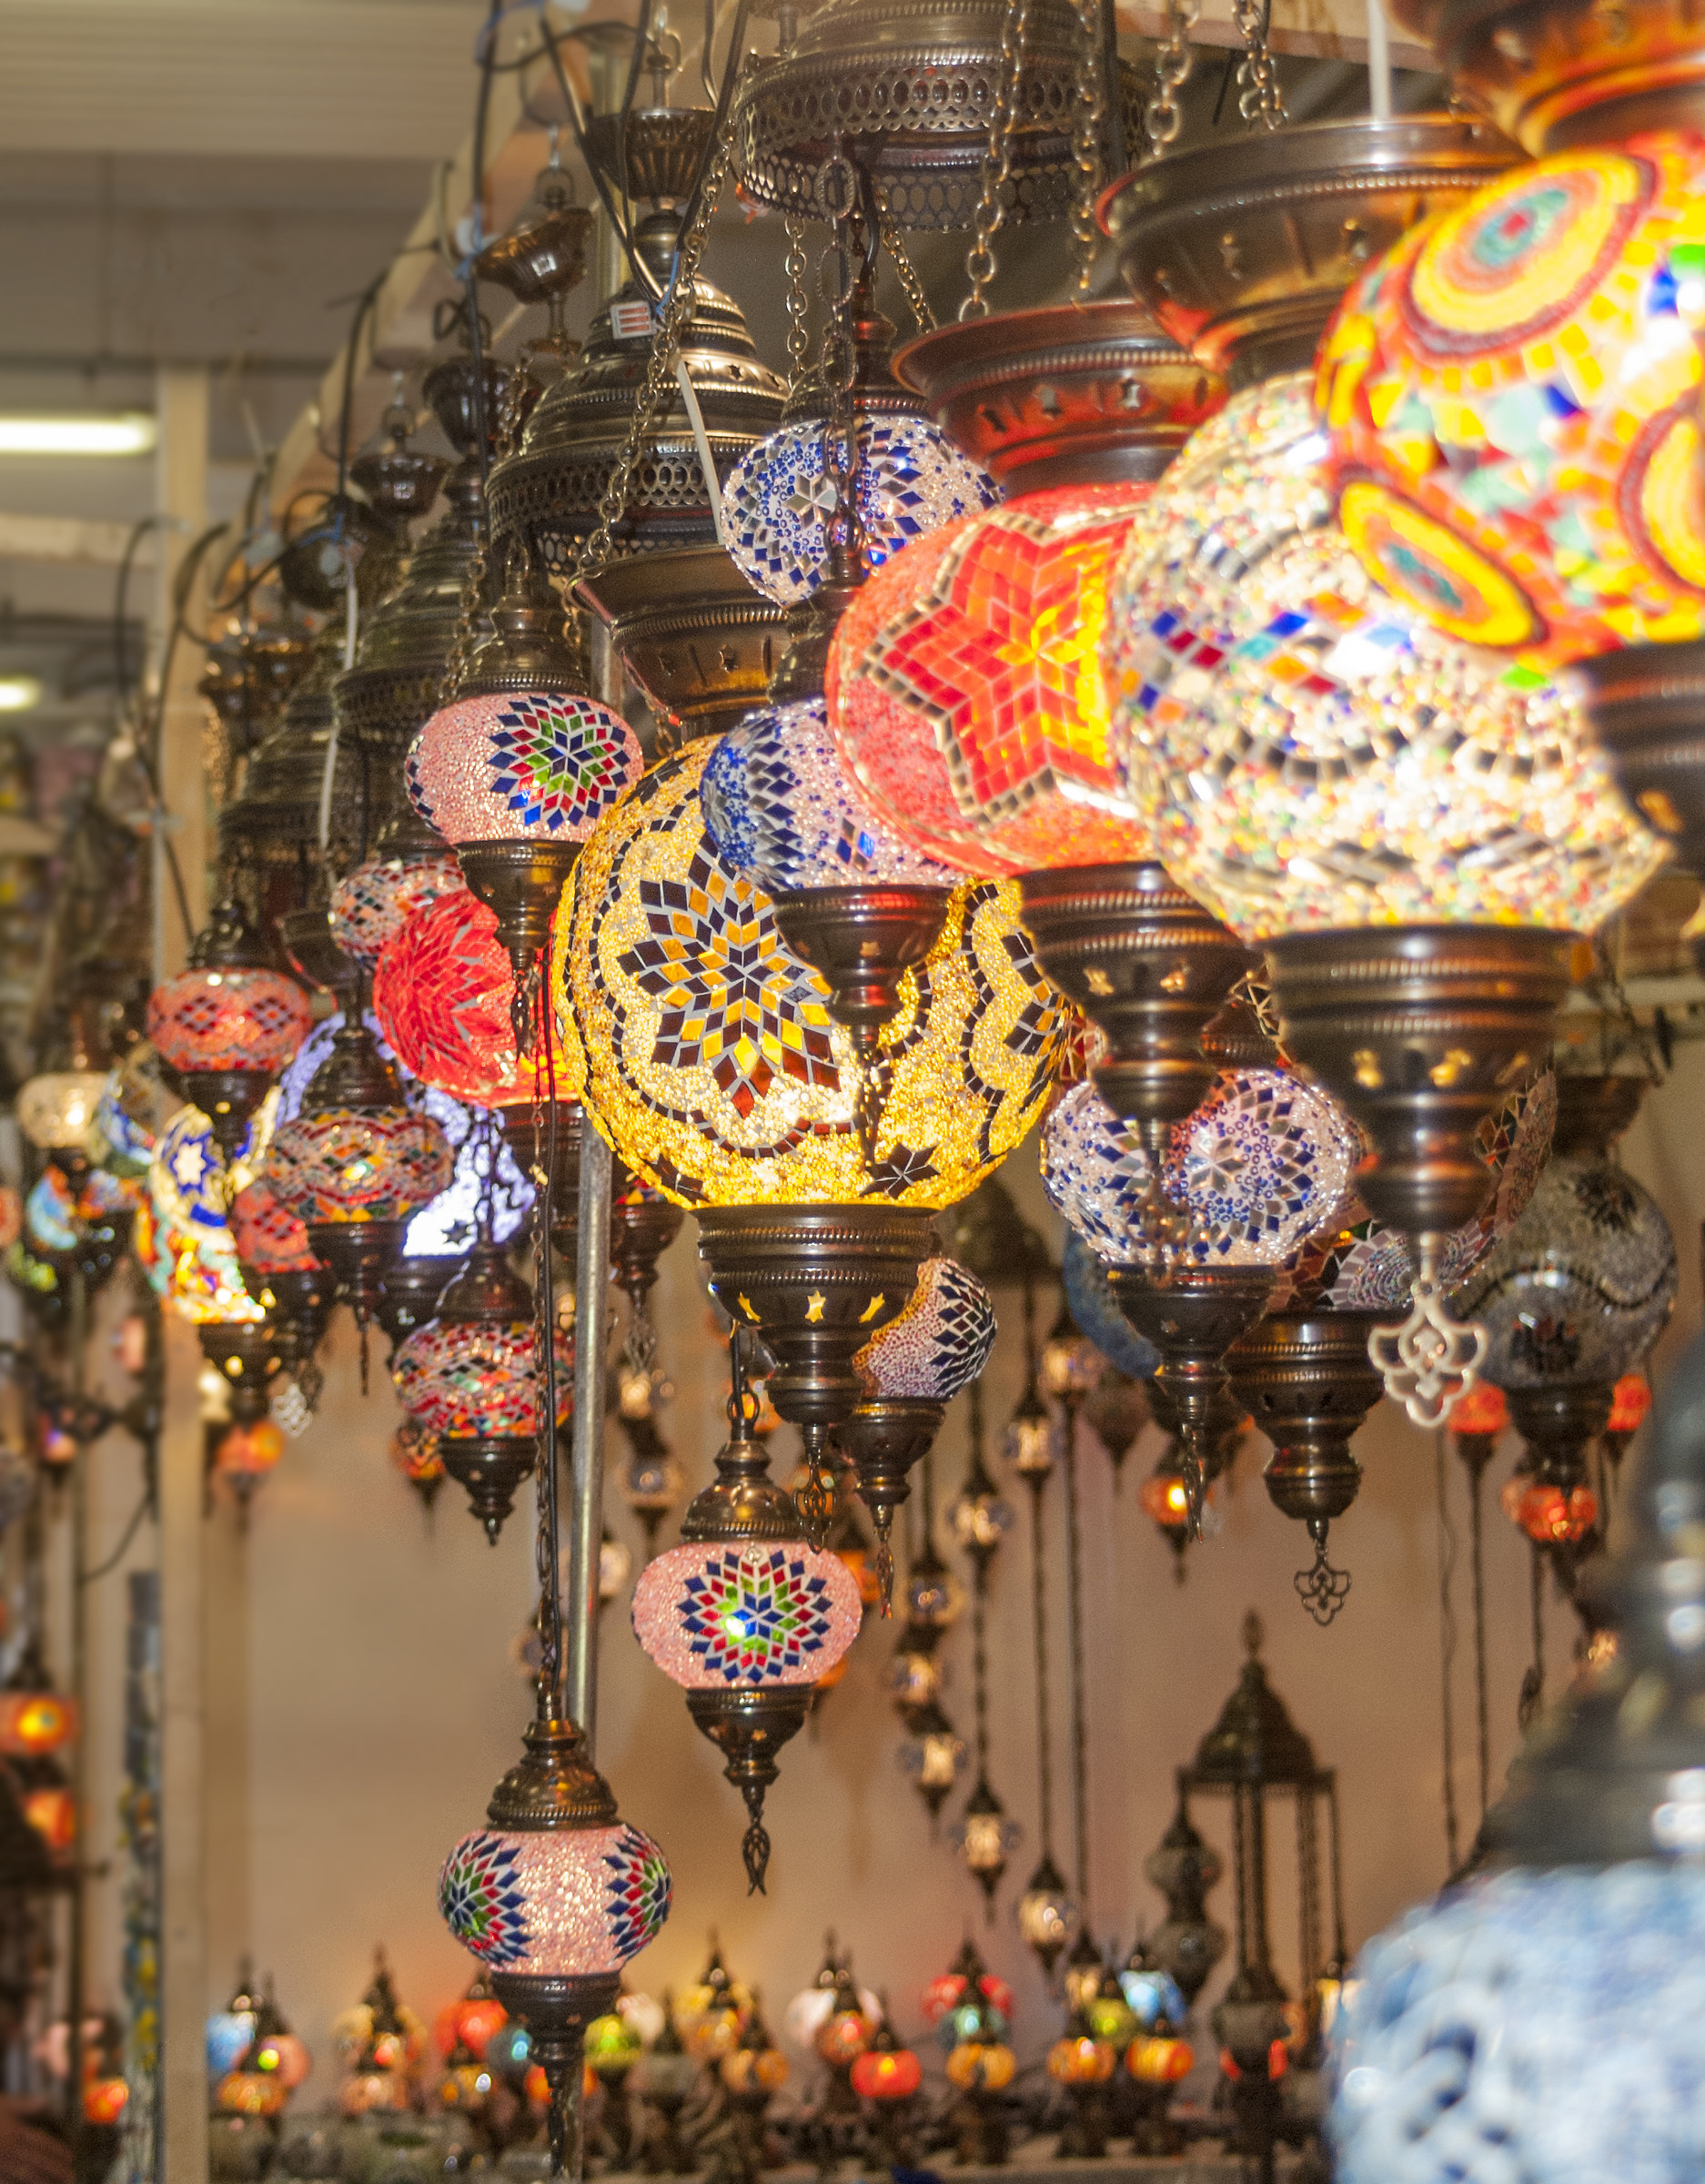 Turkish lamps at the fair...